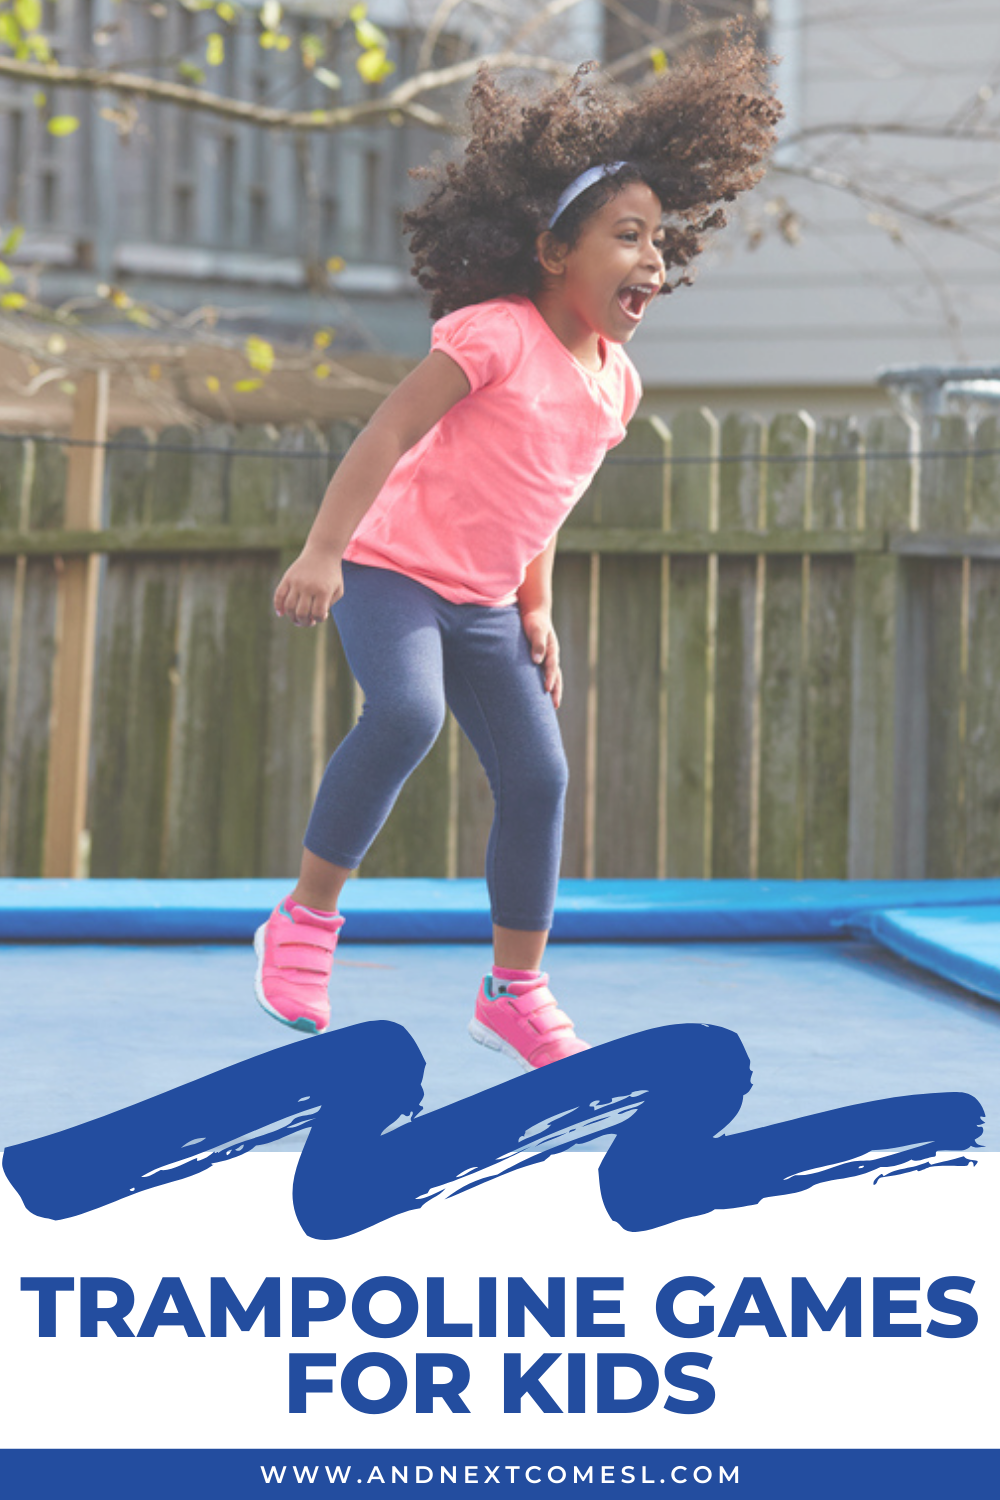 Fun trampoline games for kids & teens